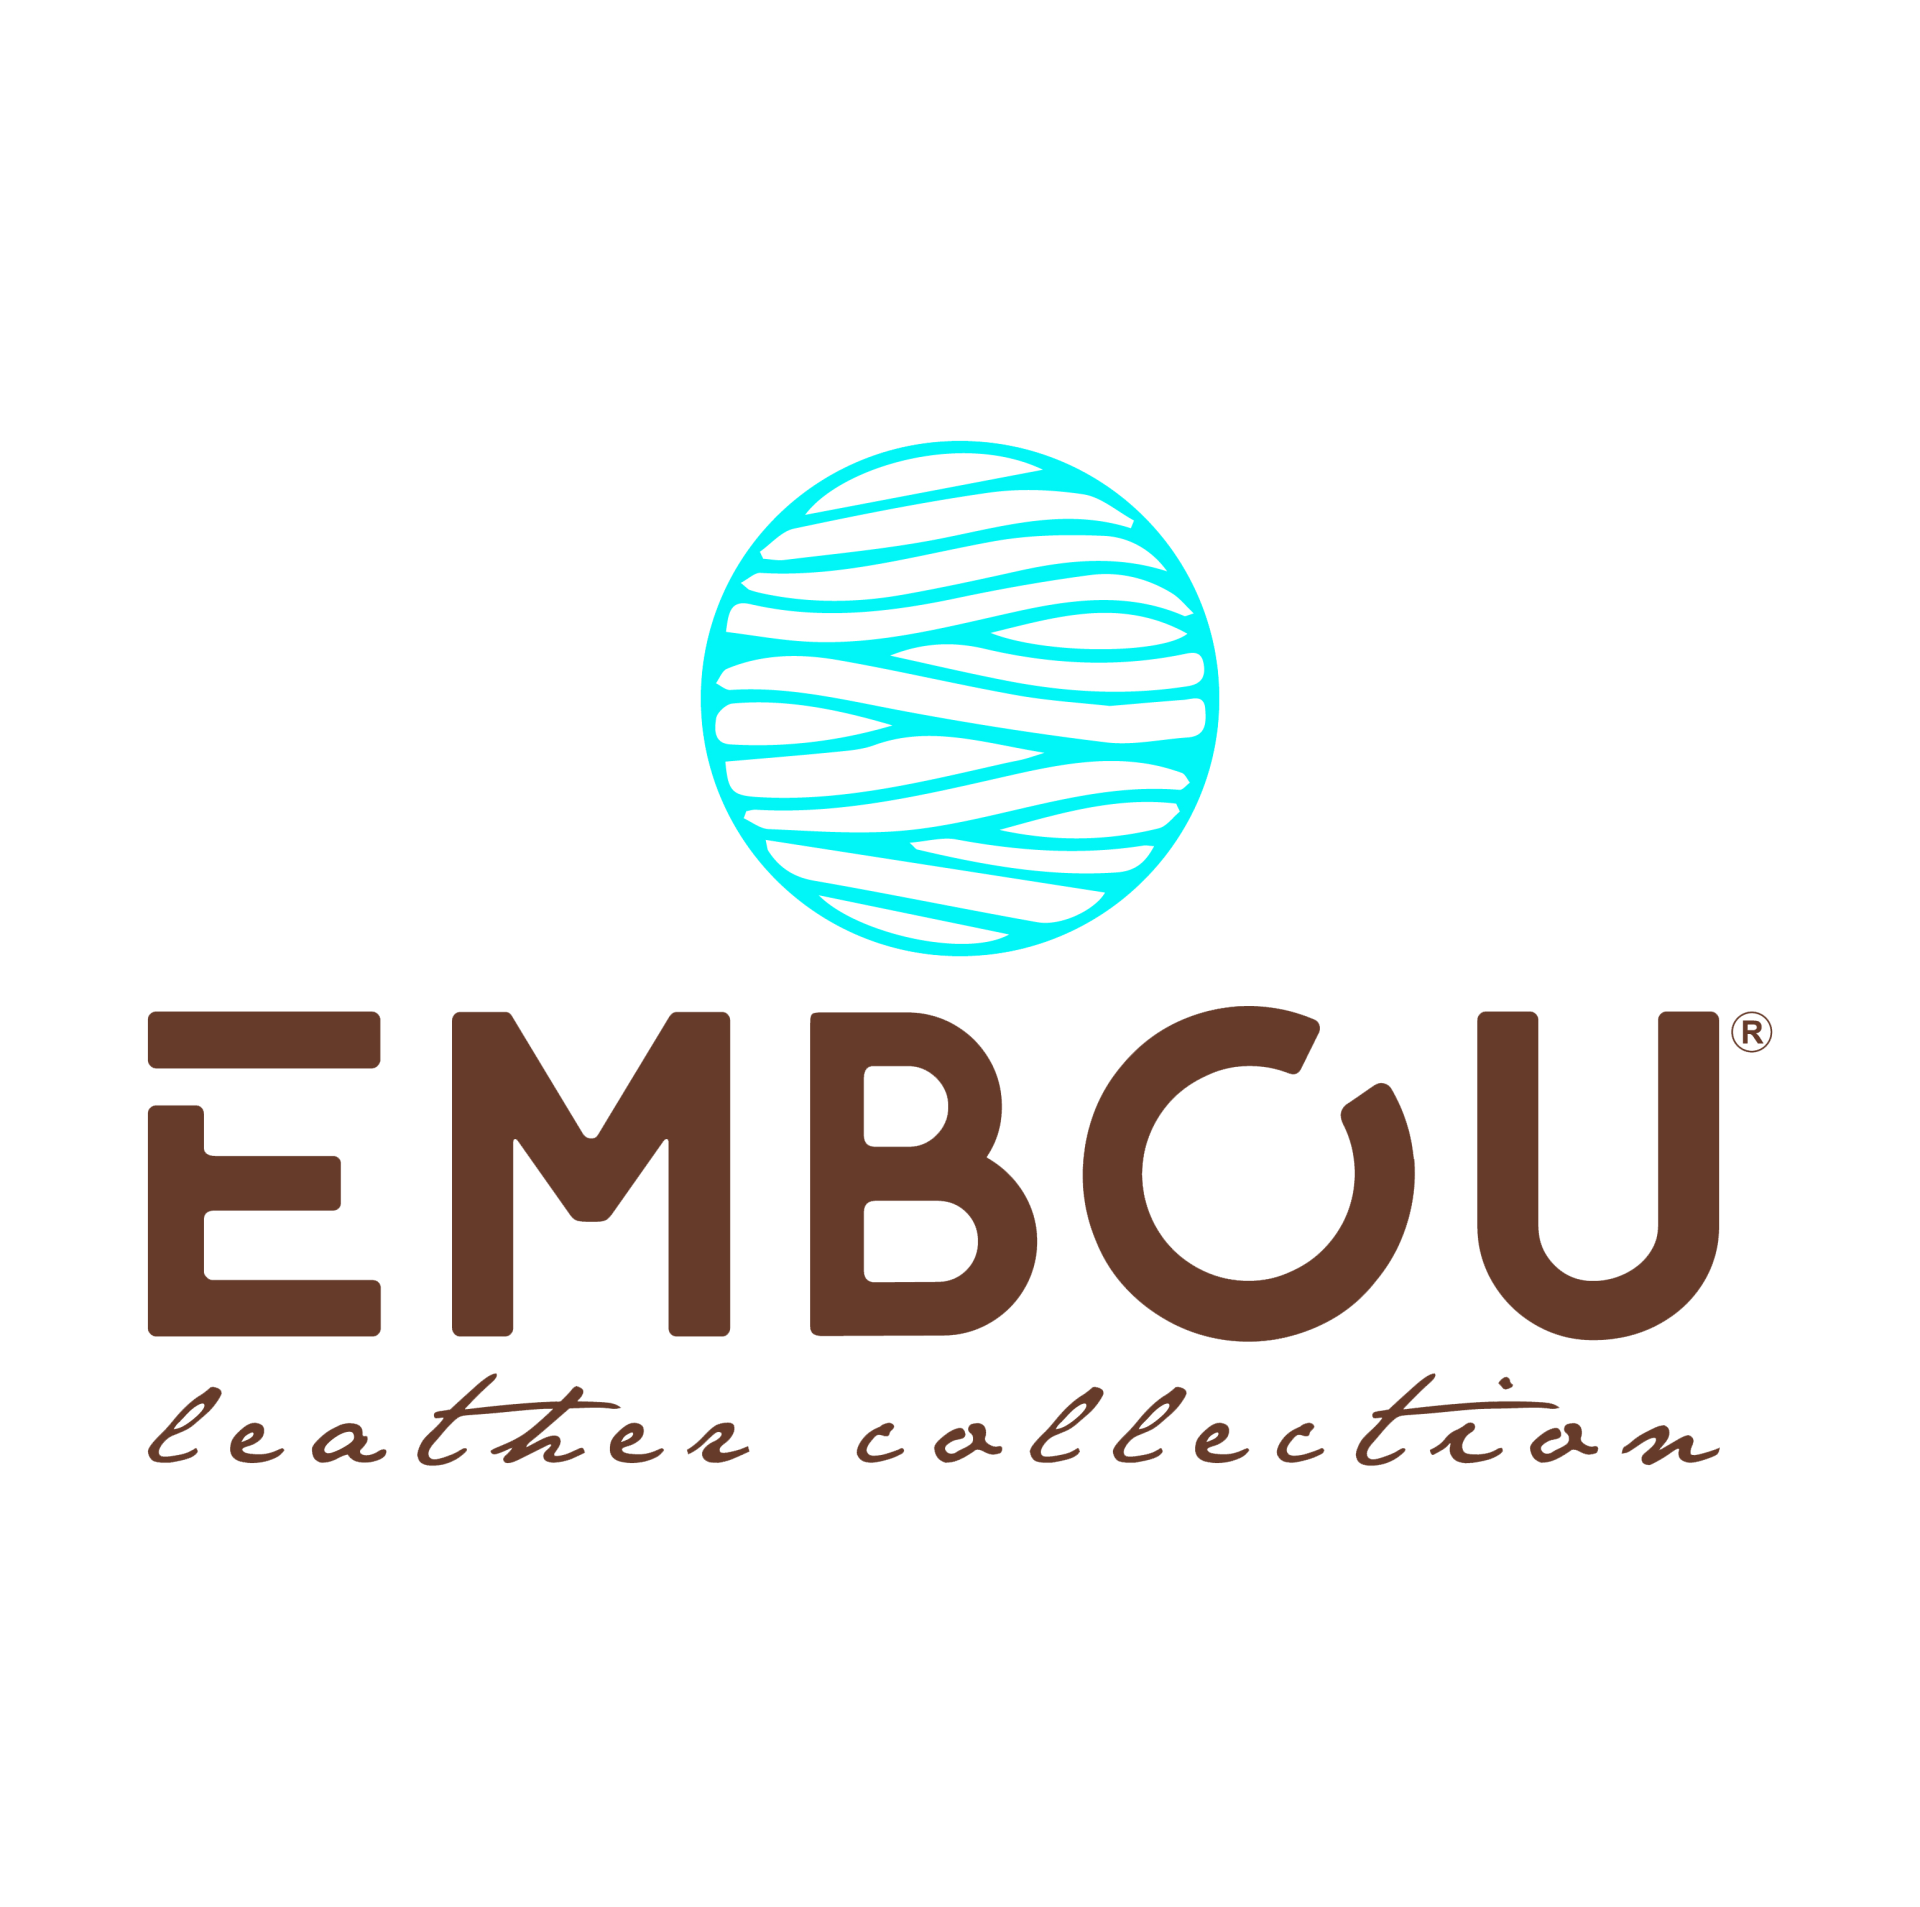 Logotipo Embou